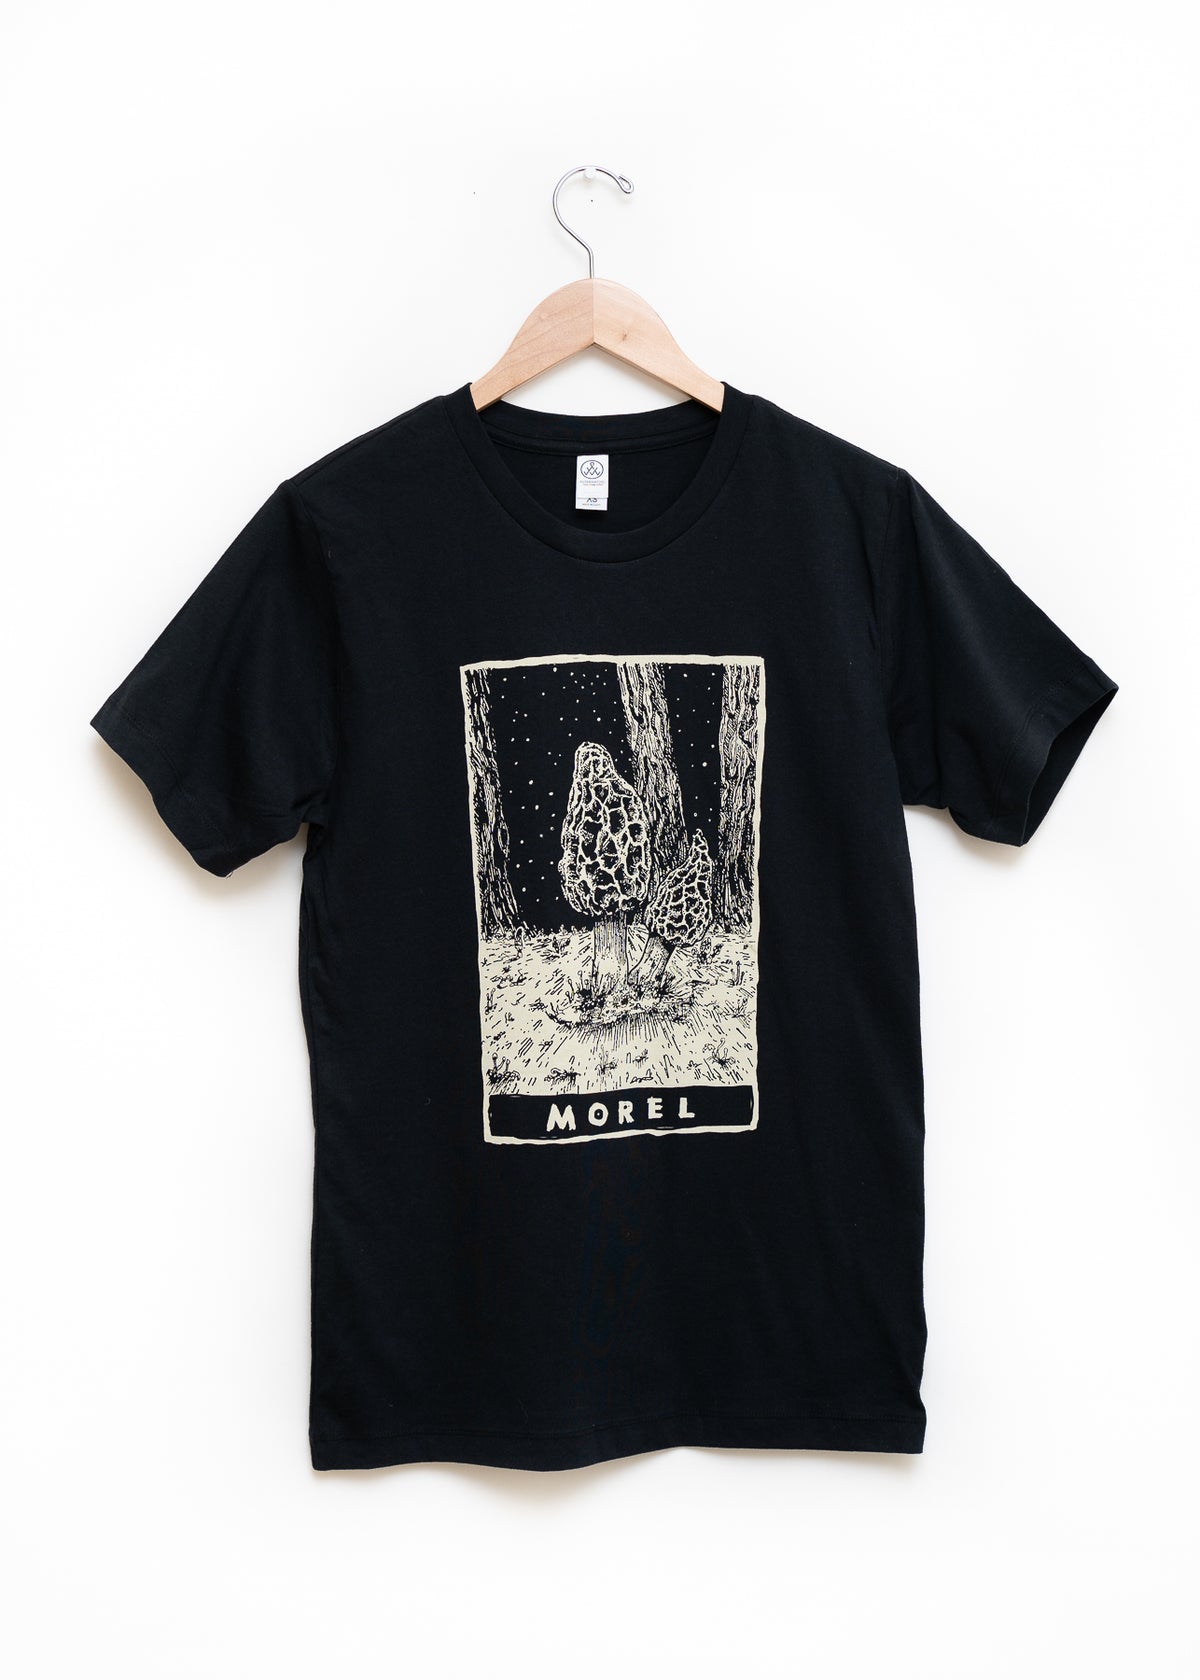 Morel Mushroom Shirt, Black Cotton US Made